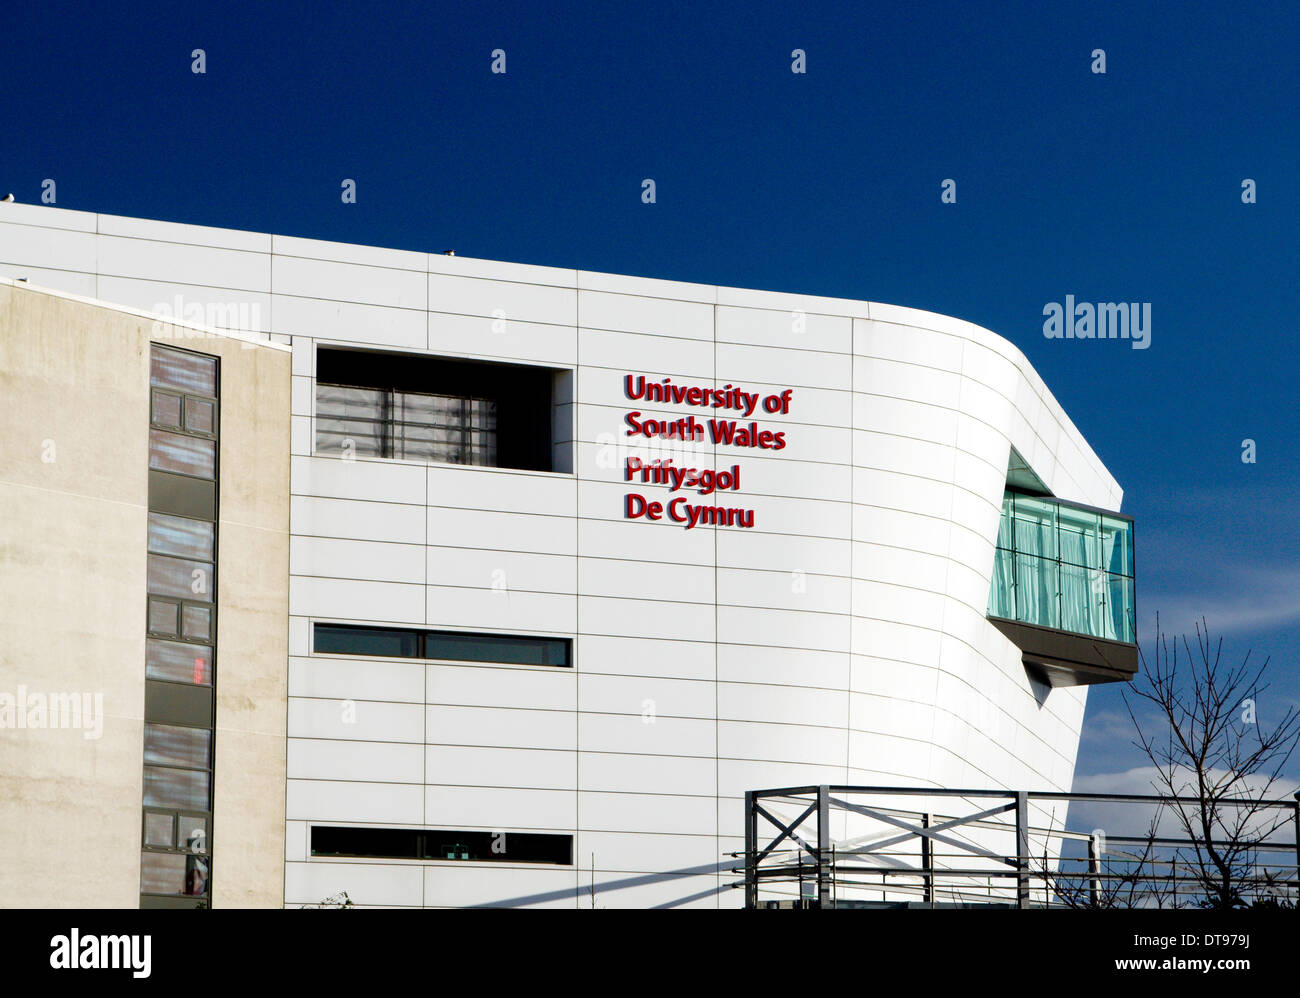 Universität von South Wales Prifysgol De Cymru Gebäude, Cardiff, Wales. Stockfoto